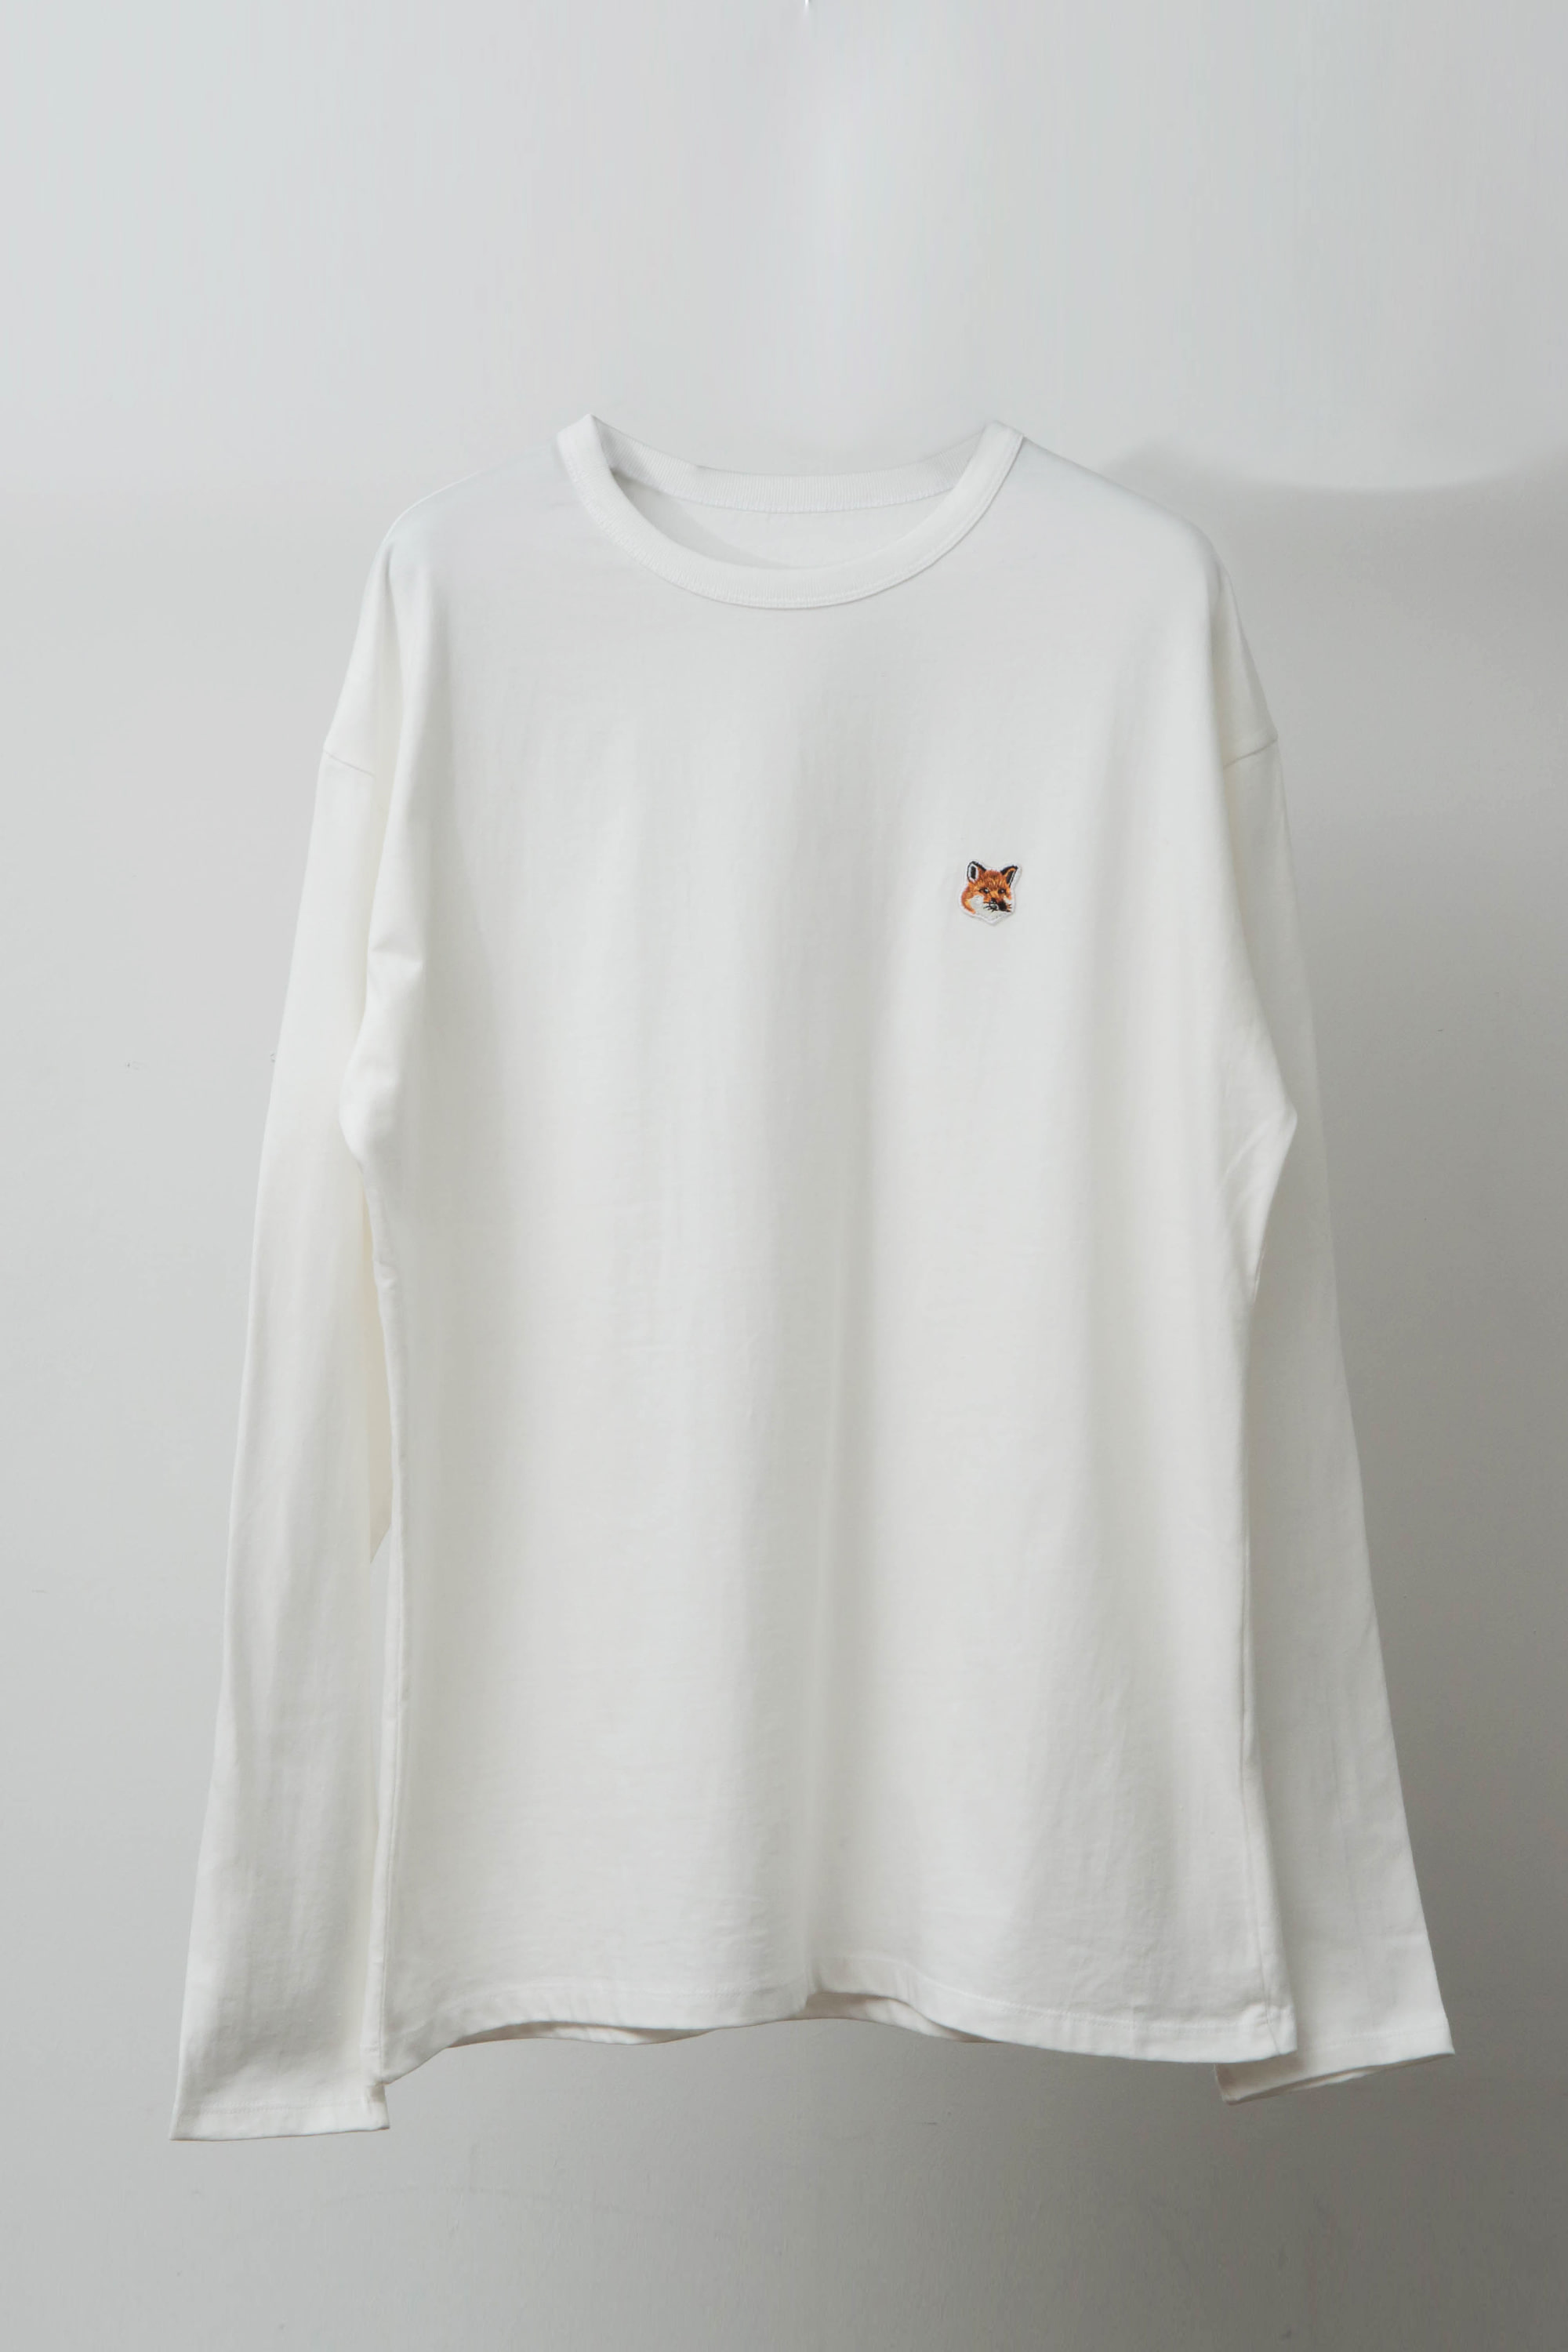 Unisex Long Sleeve Tee-Shirt Fox Head Patch  (White &amp; Black)   (GOLD FOX 자수 100% 작업)  프리미엄 코튼원단  당일발송 set구매시 5000원 할인